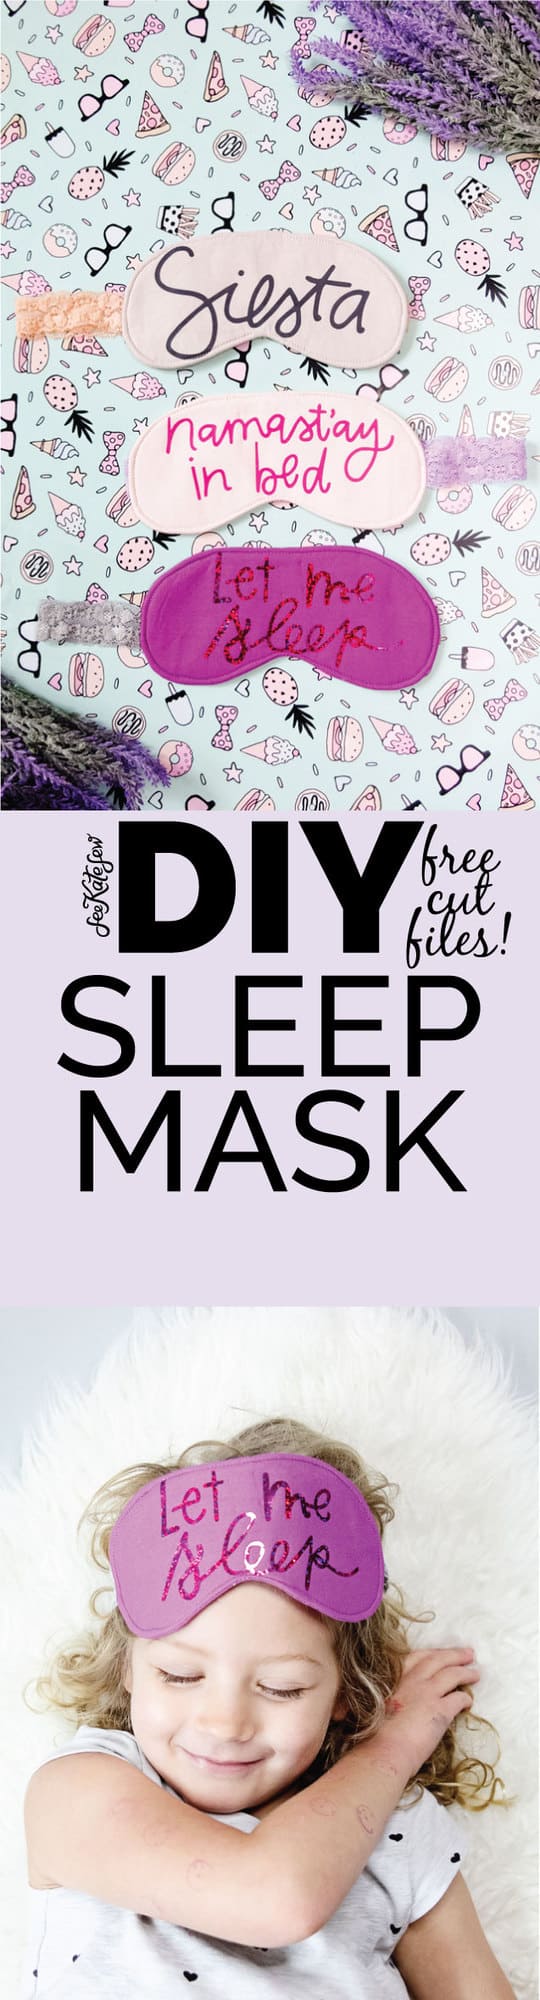 DIY sleep mask with cut files